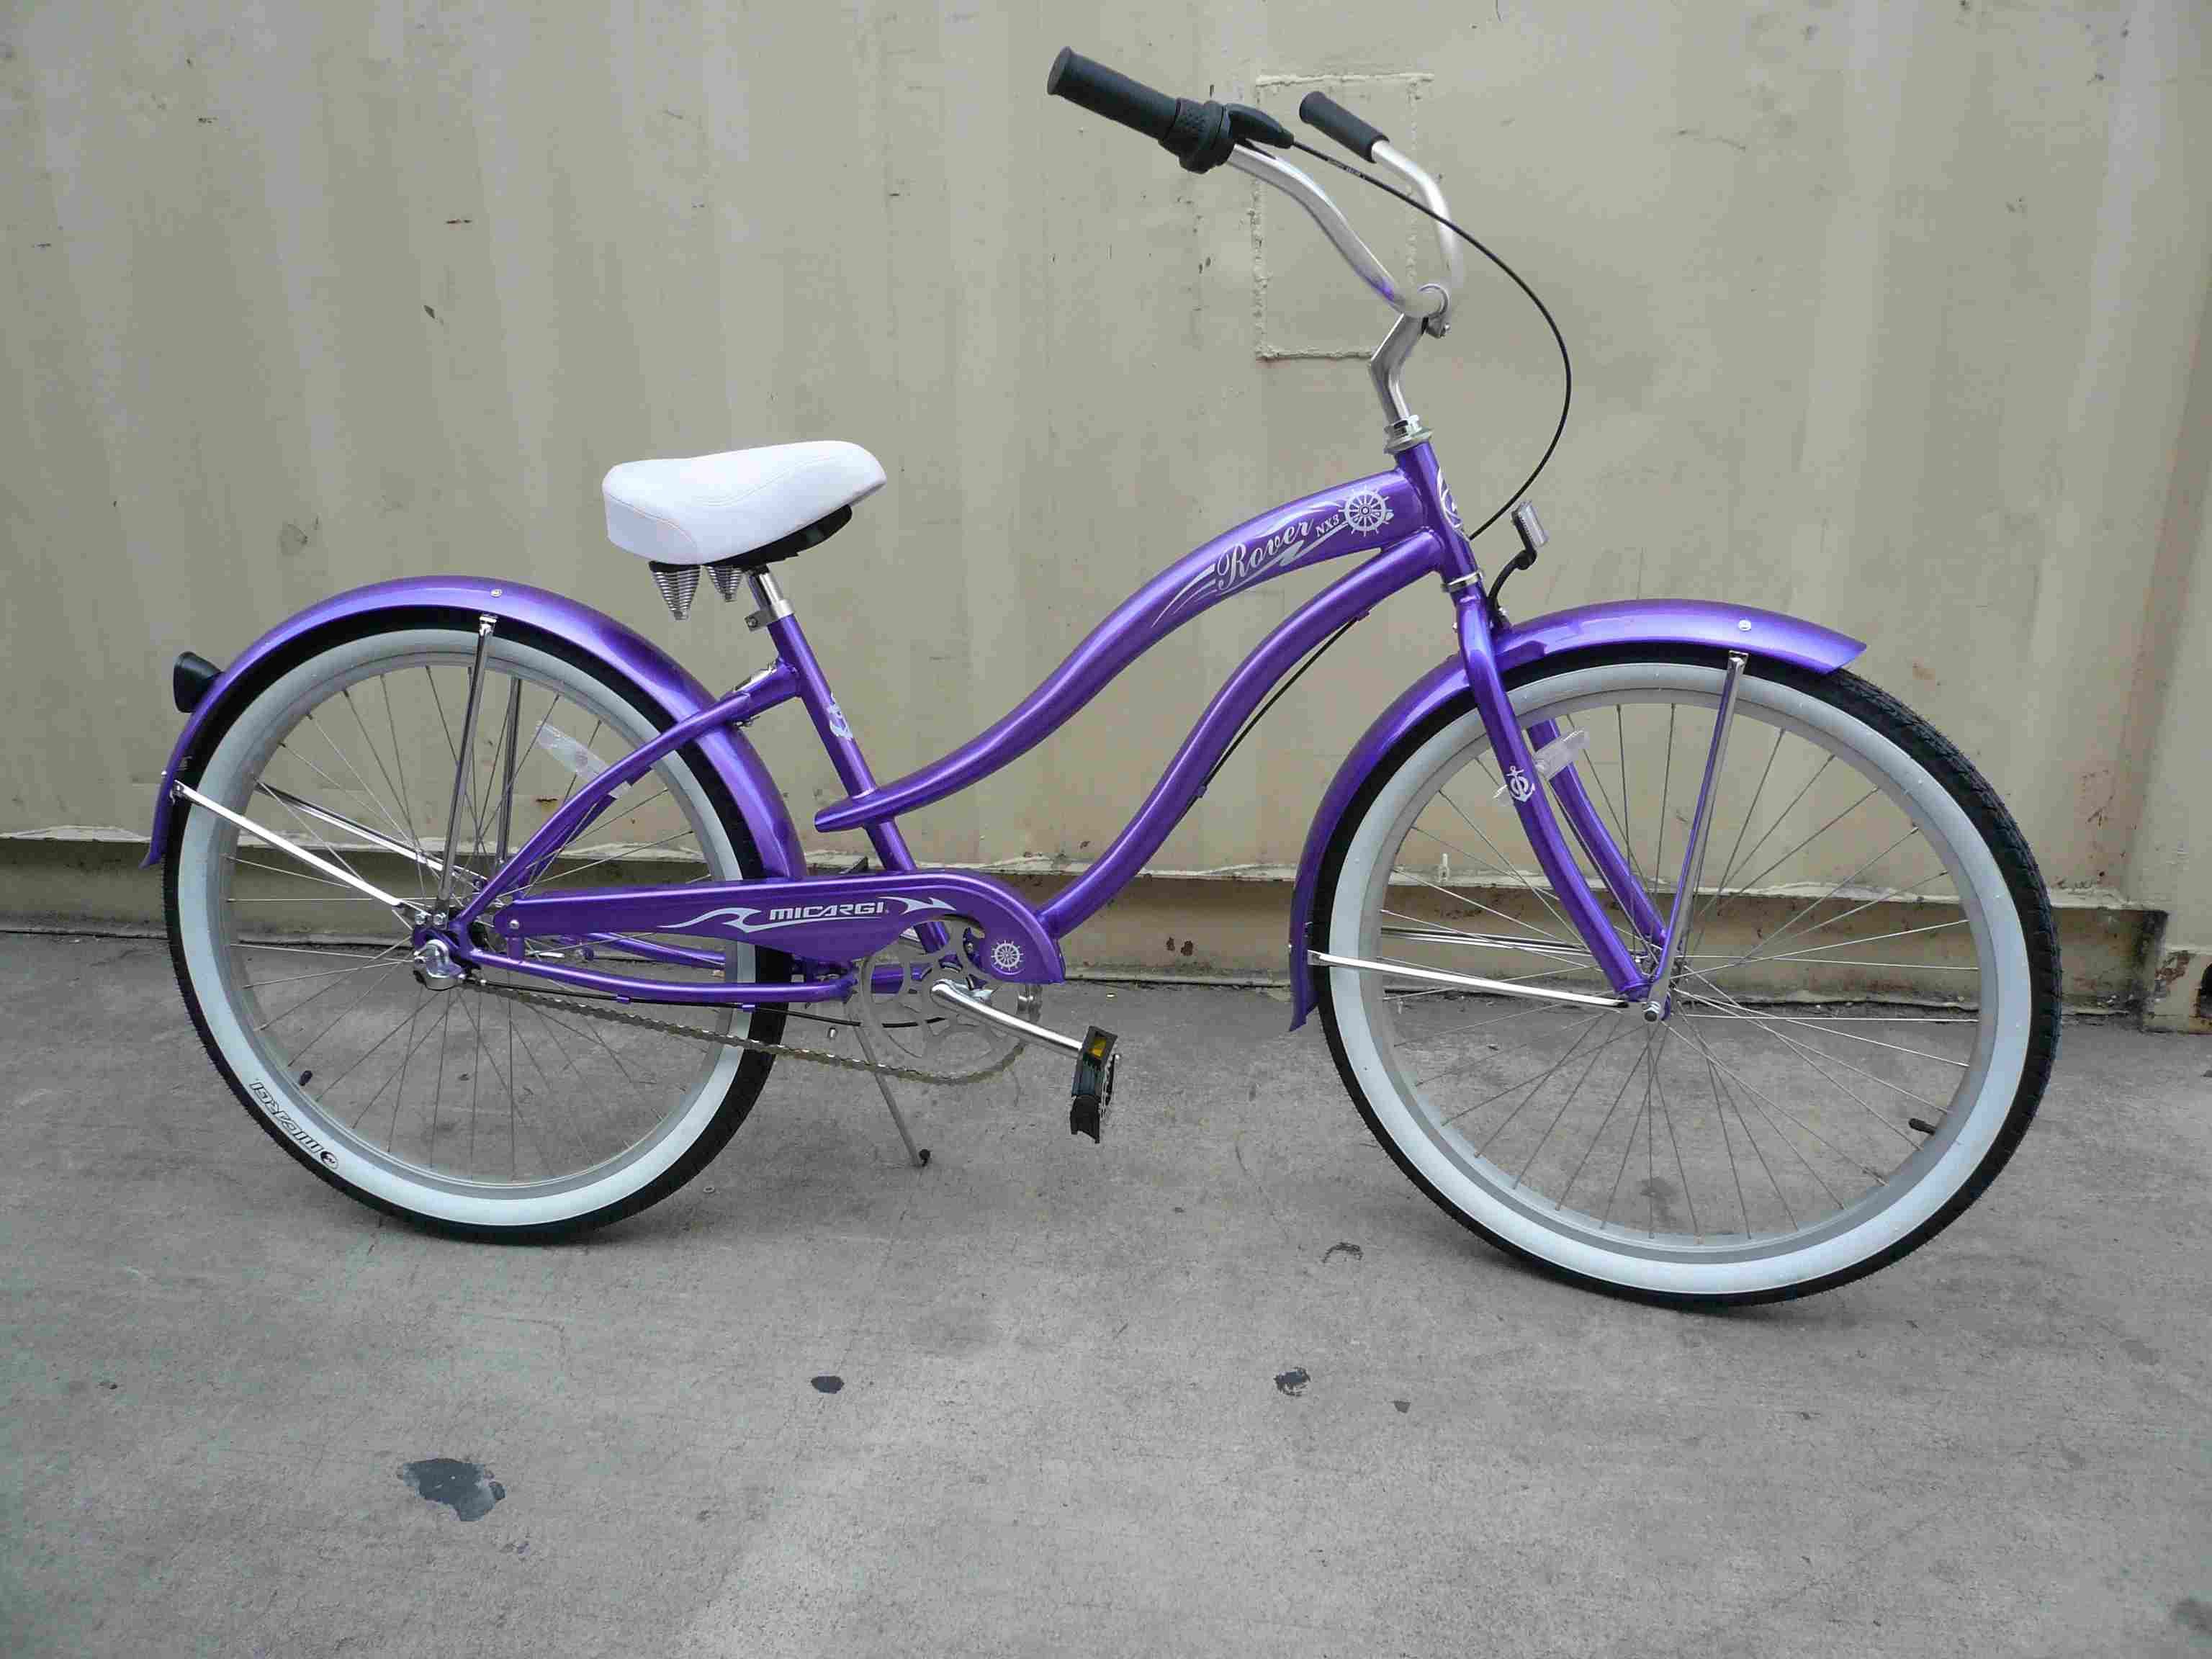 26 3 Speed Beach Cruiser Bicycle Bike Rover Lady Purple